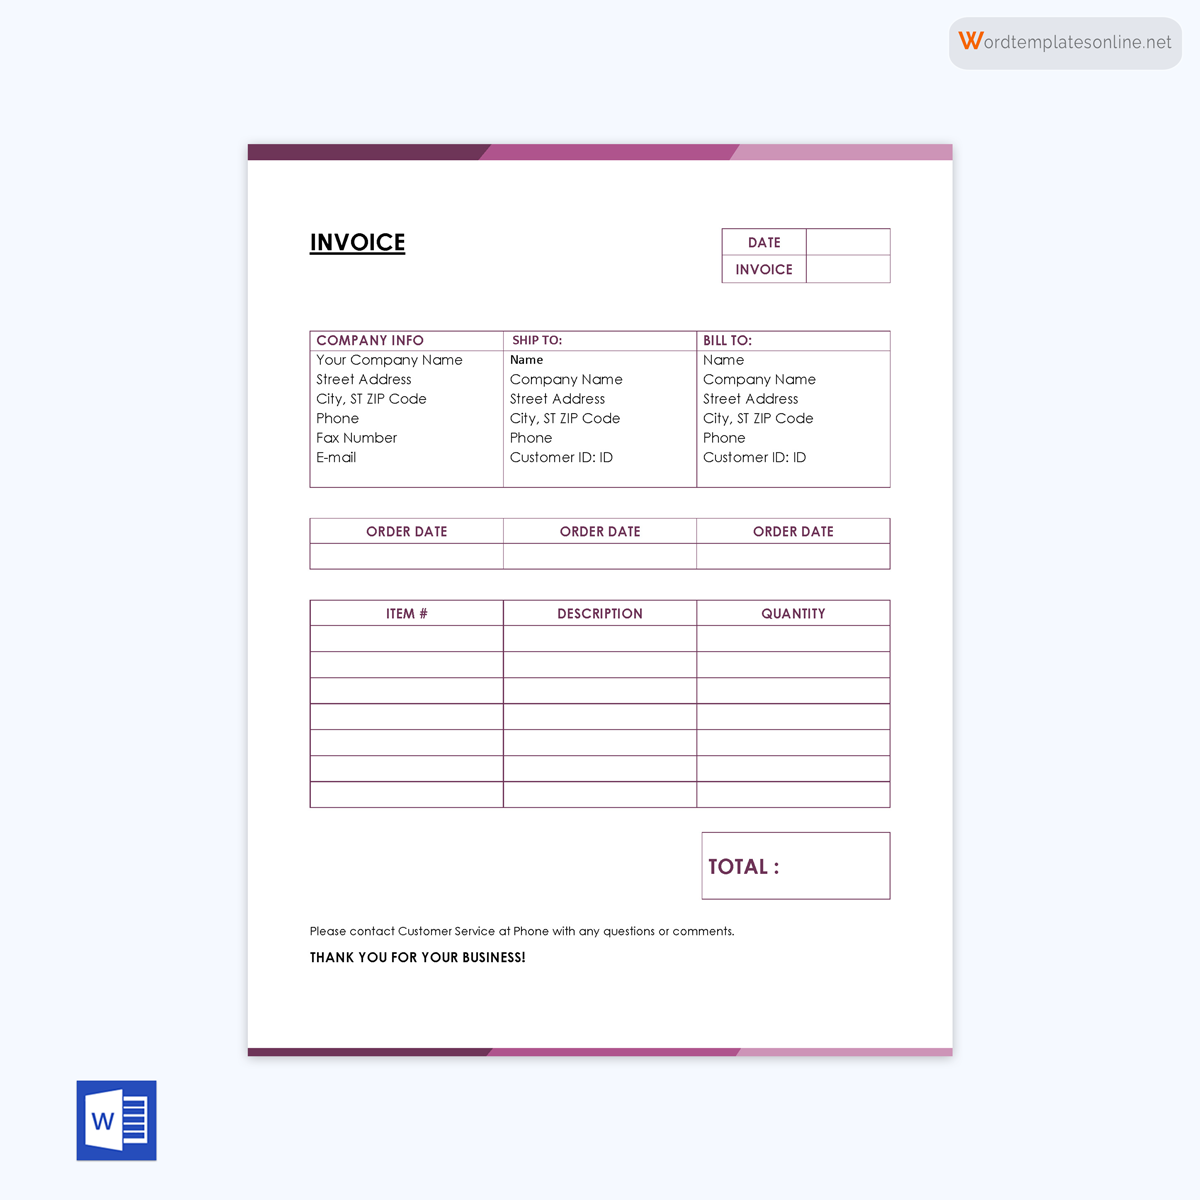 40 Free Blank Invoice Templates (Excel | Word) - Edit & Print